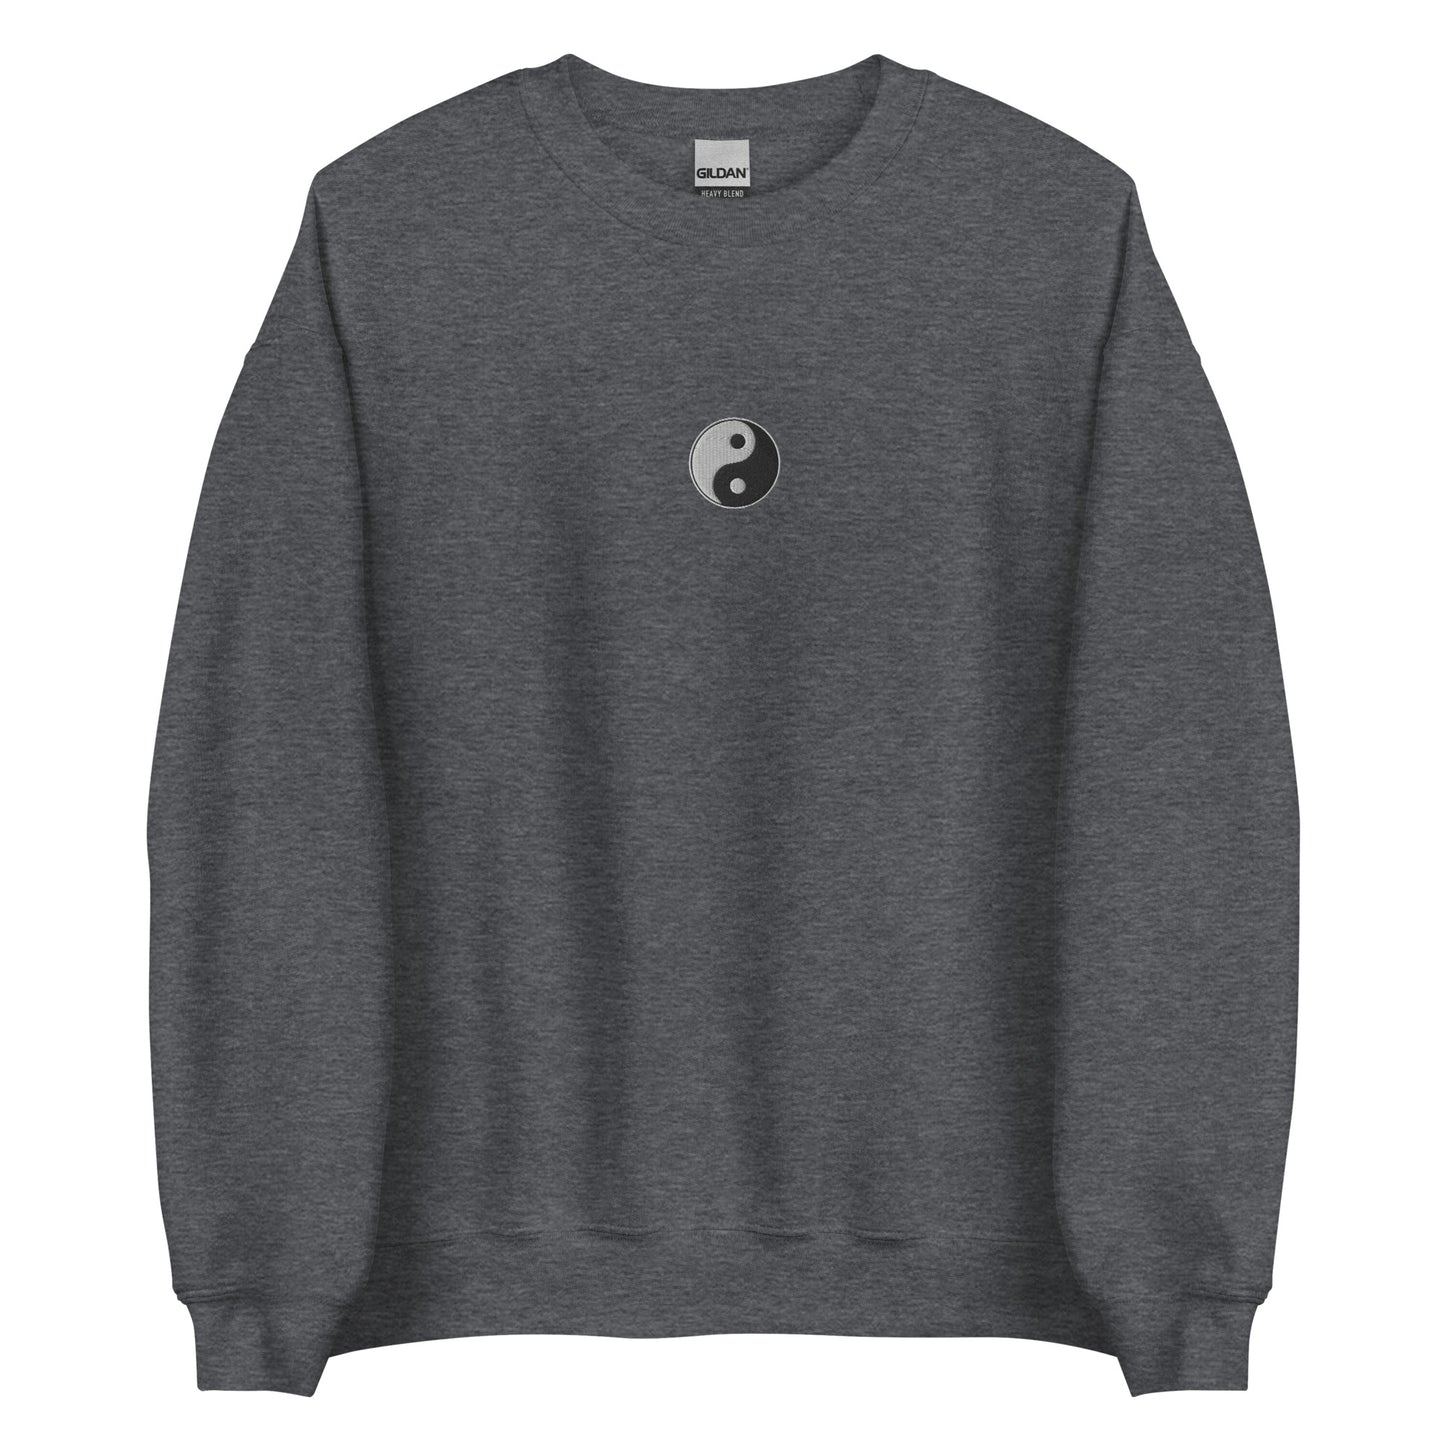 Yin Yang Embroidered Sweatshirt Unisex, Japan, Japanese Clothing, Aesthetic, Sweater, Men/Women/Girl/Boy, Gift, Harajuku, Asian